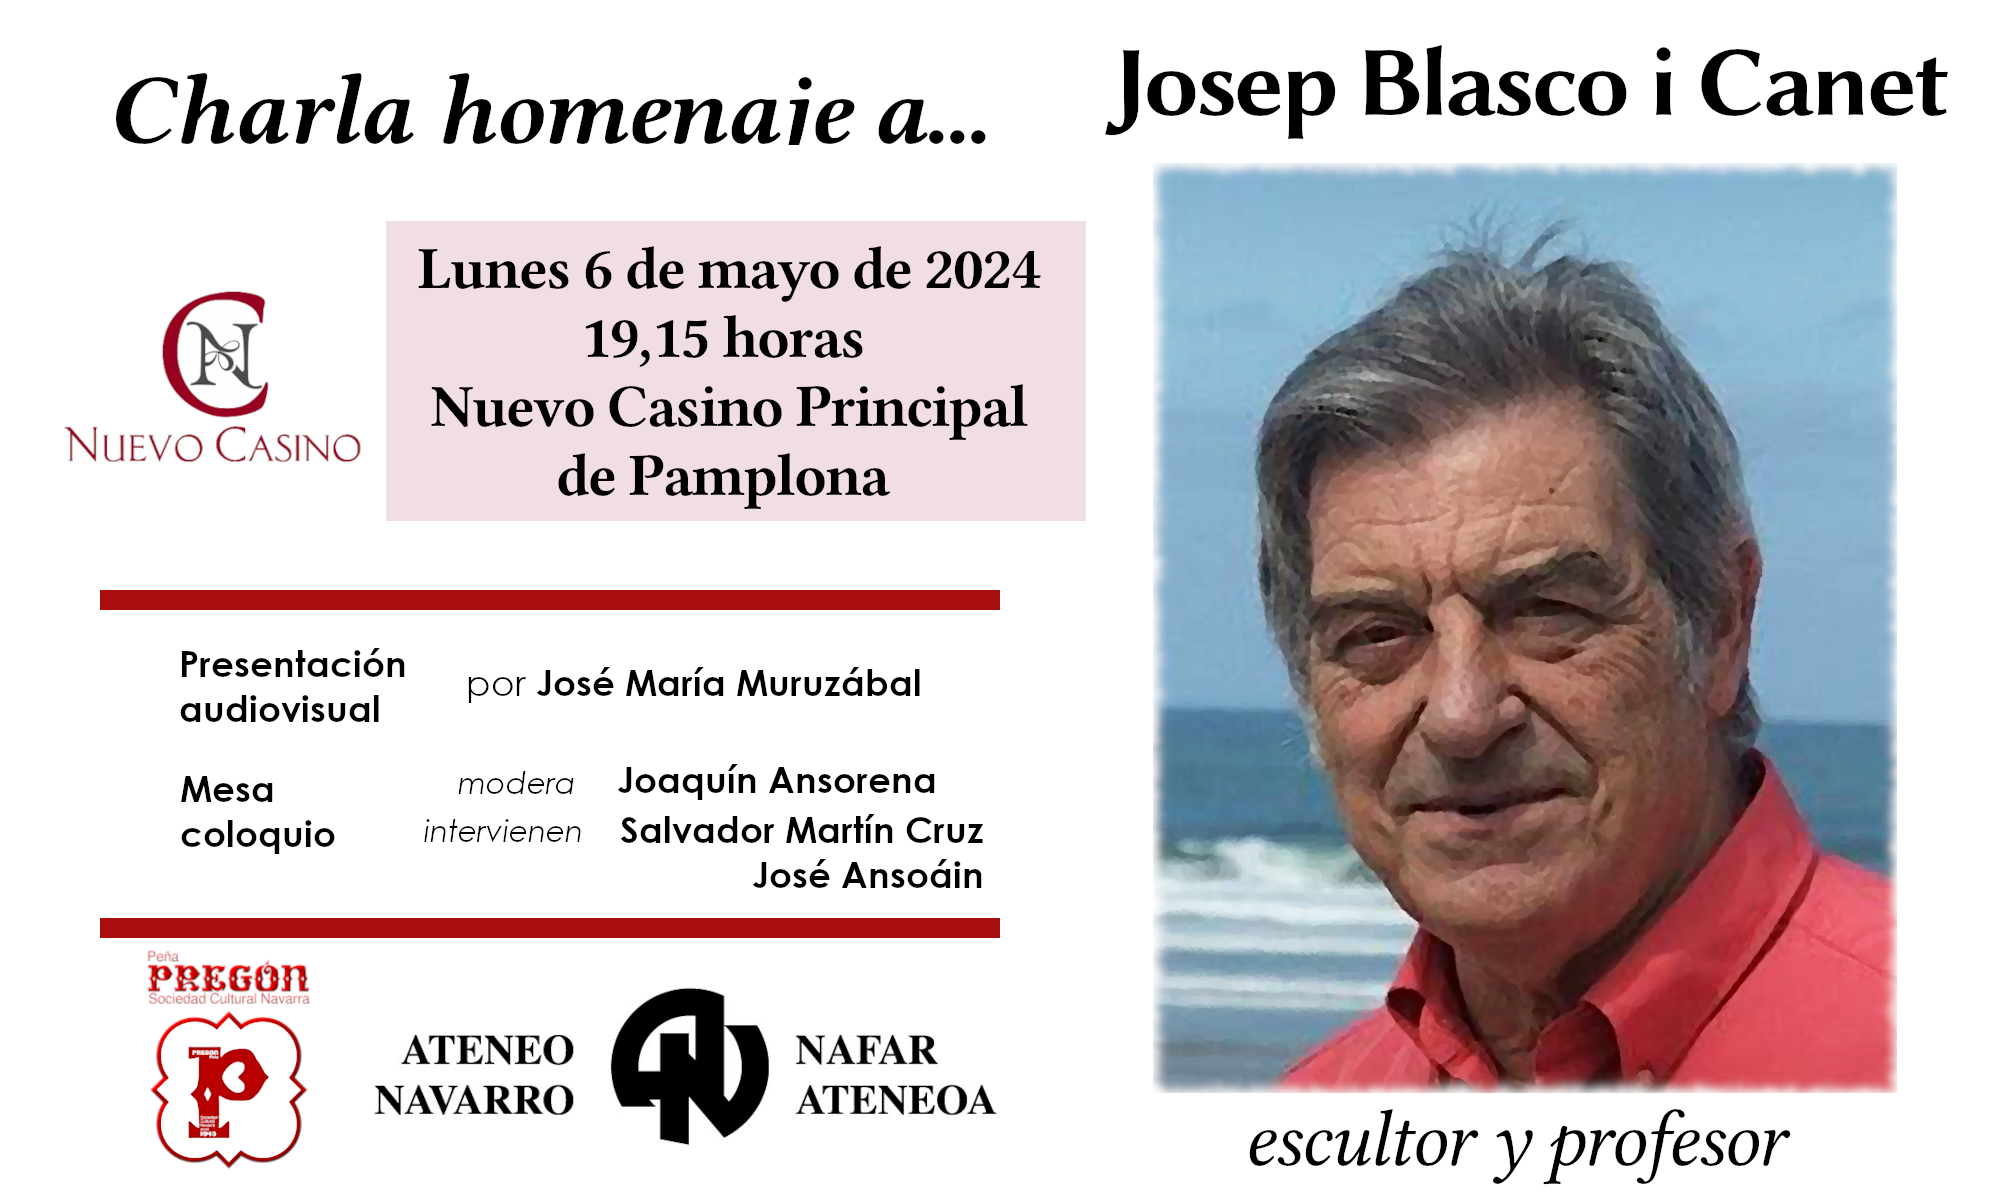 Charla homenaje a Josep Blasco i Canet